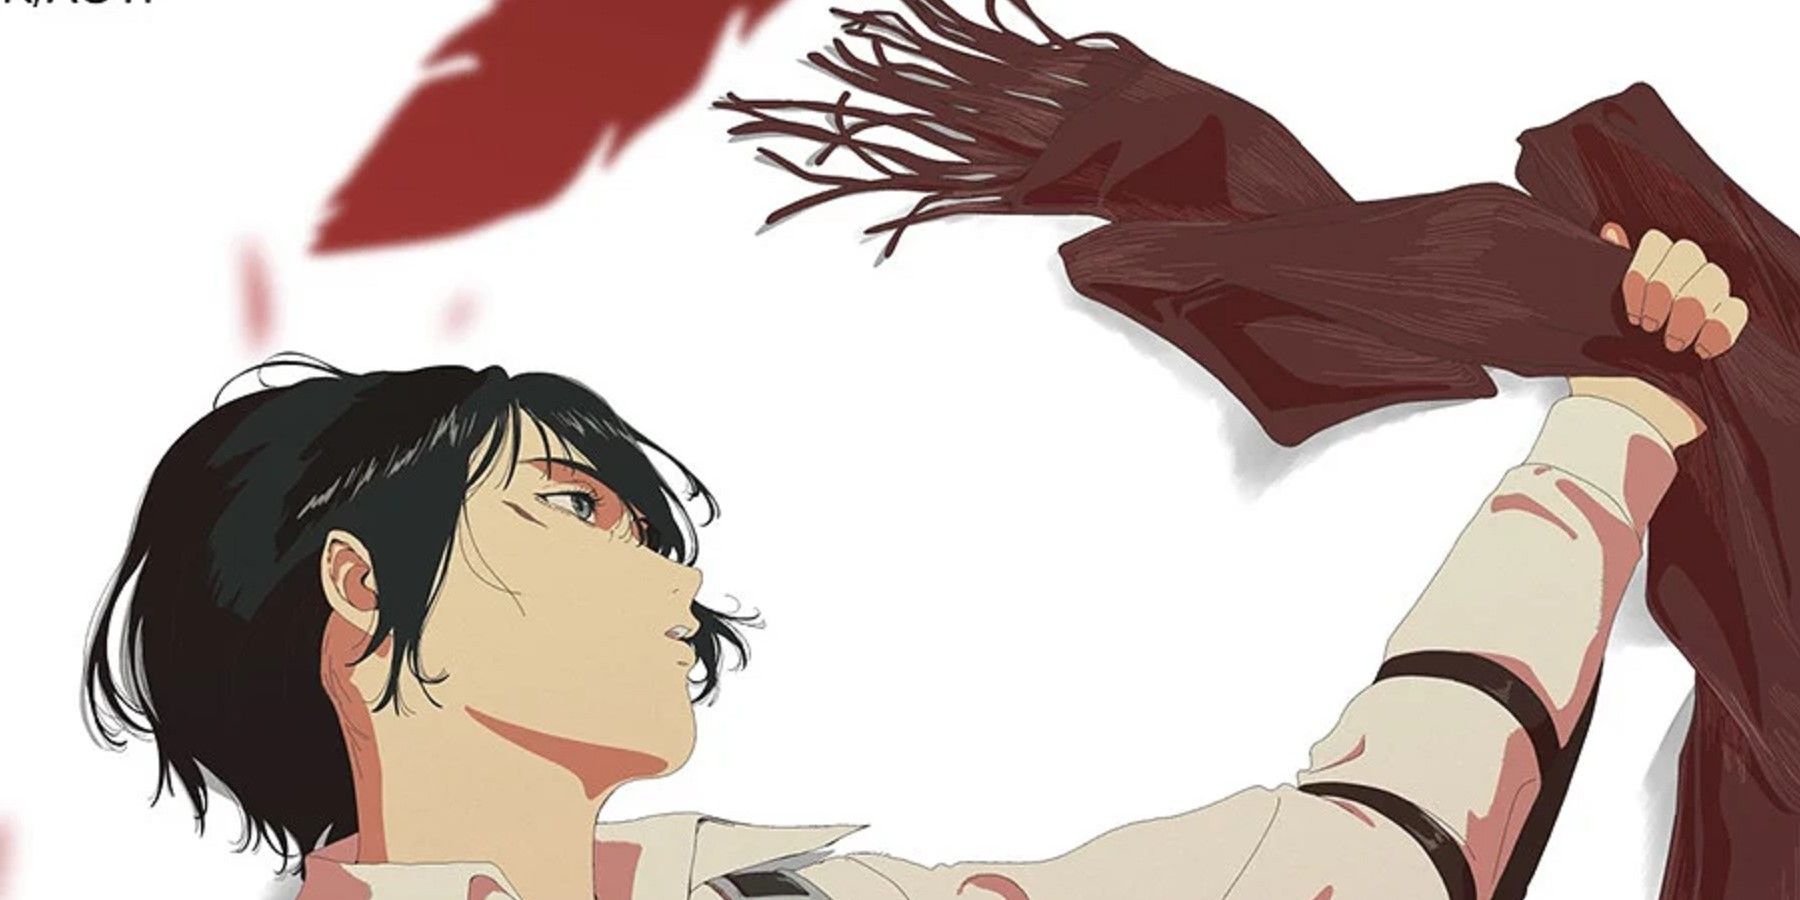 Shingeki no Kyojin: The Final Season Part 3 (Part 1) - PV/Trailer